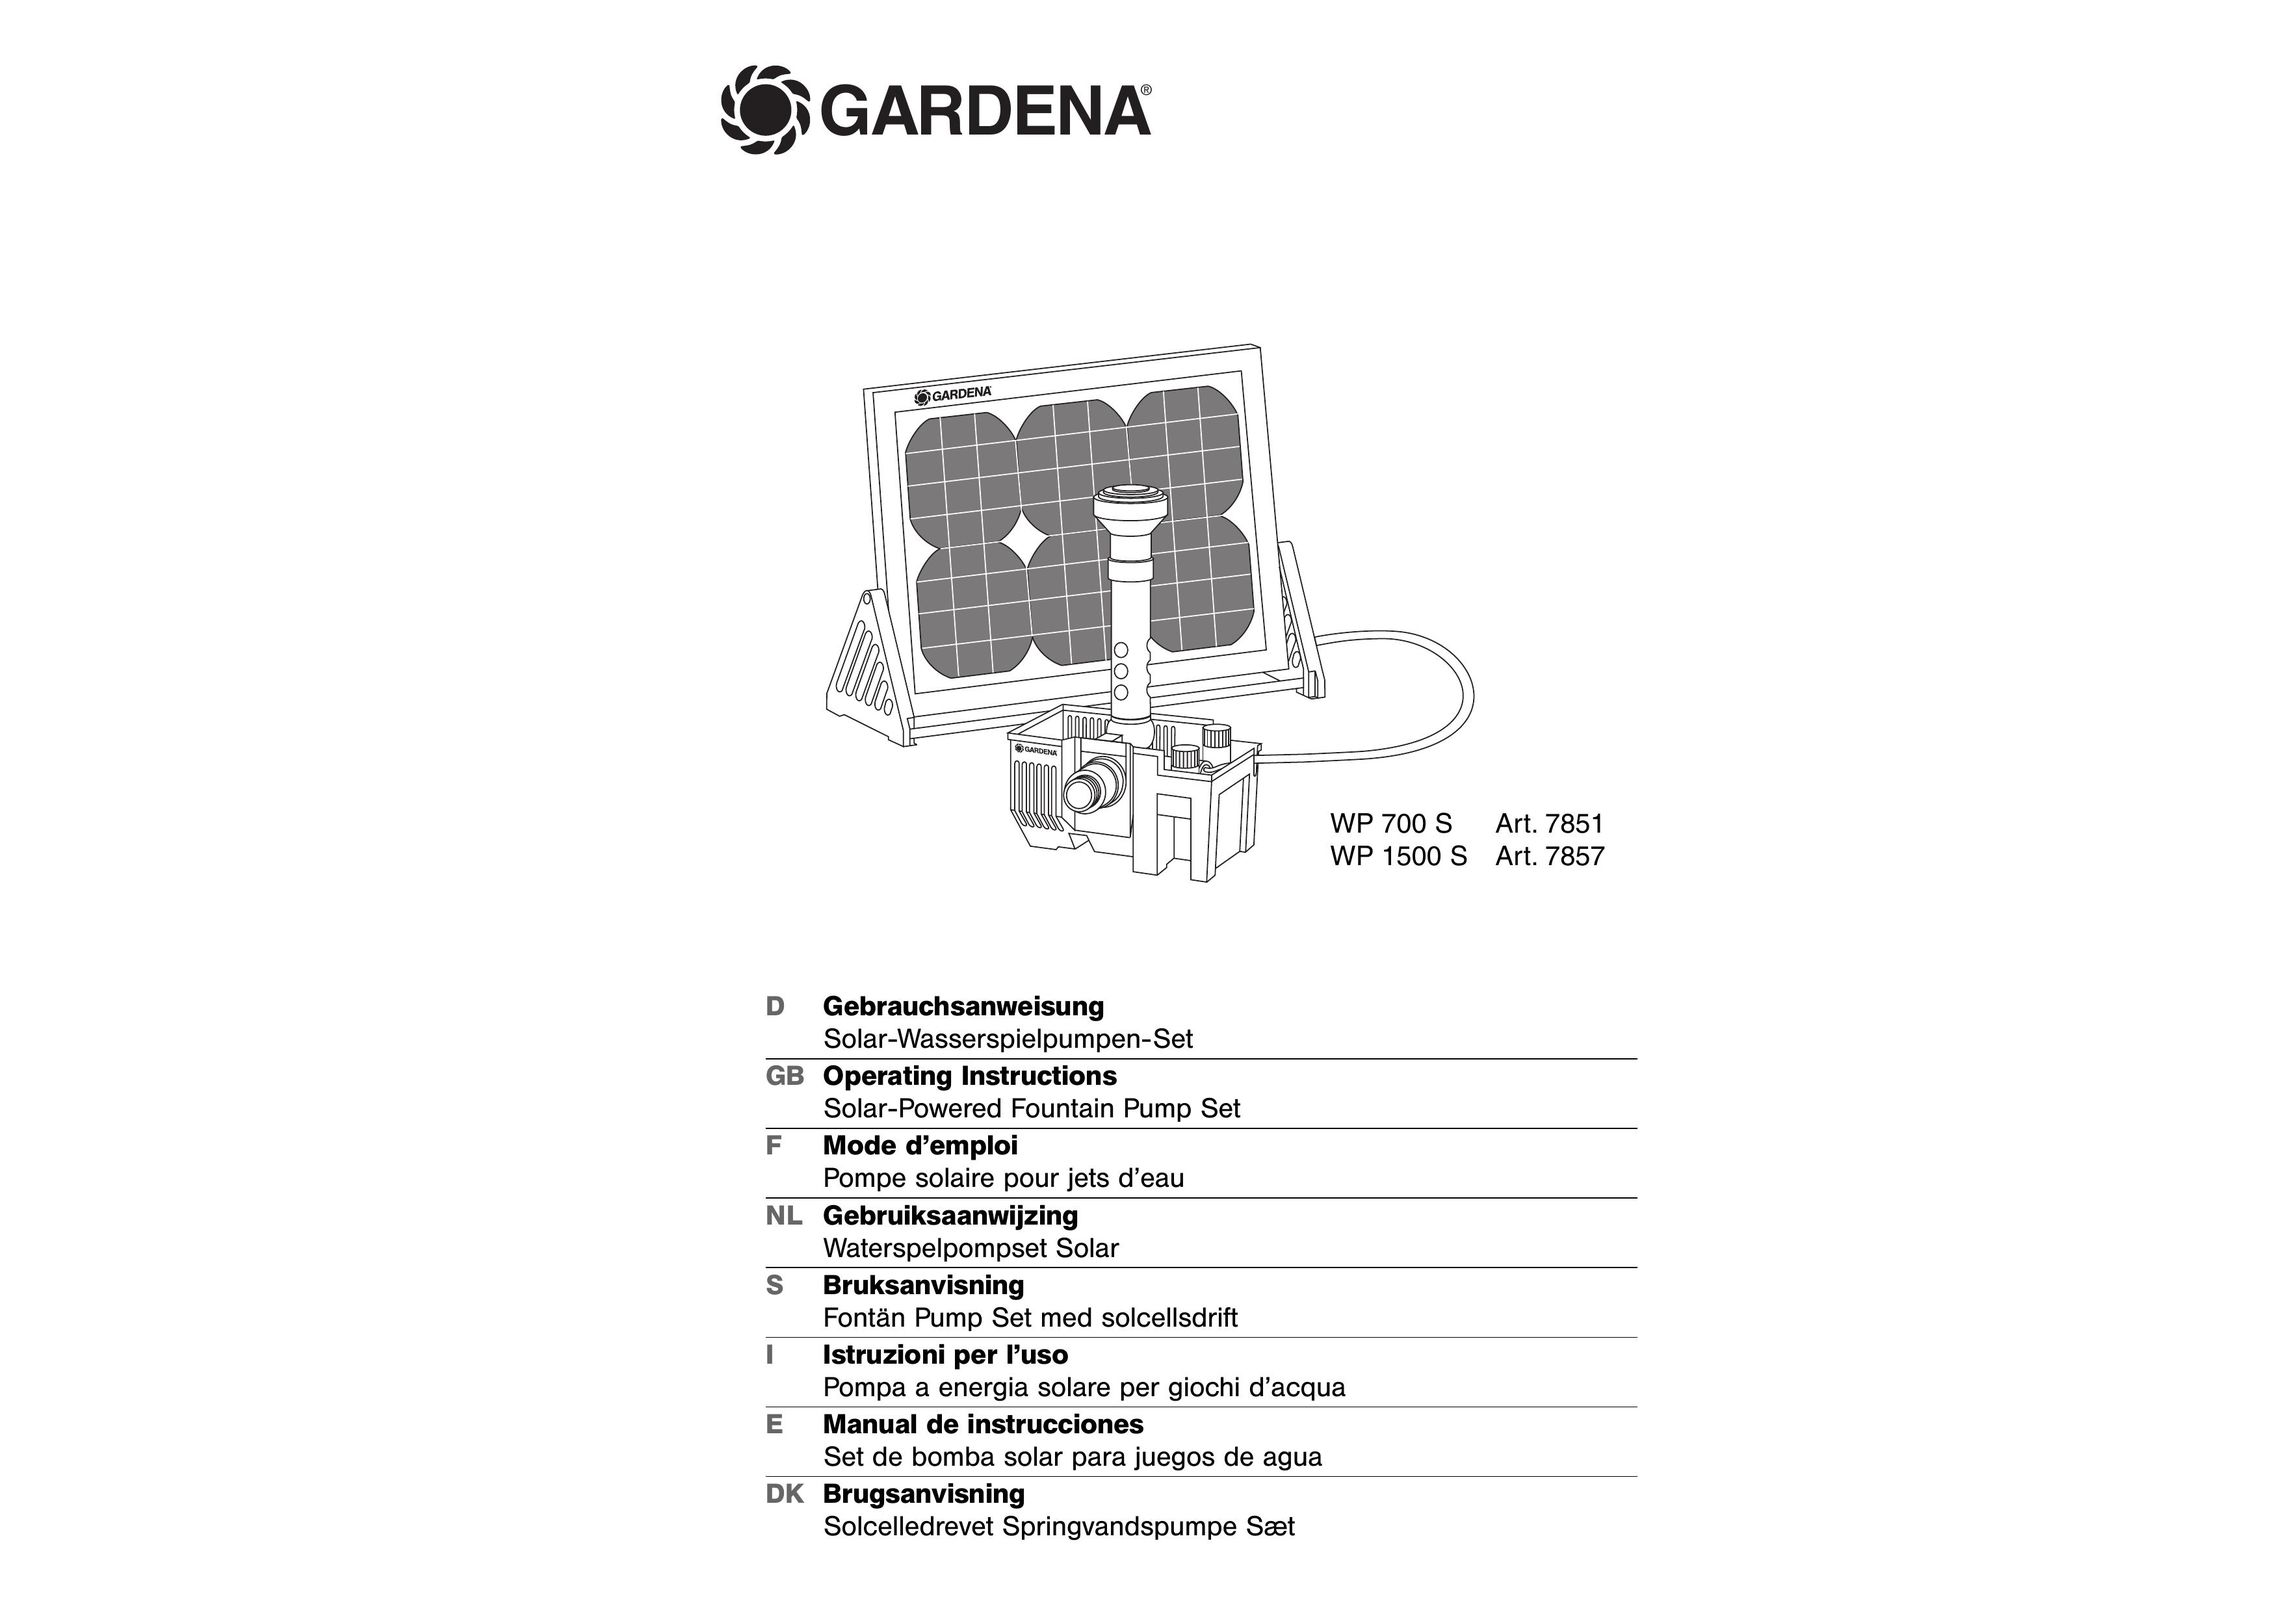 Gardena WP 1500 S Heat Pump User Manual